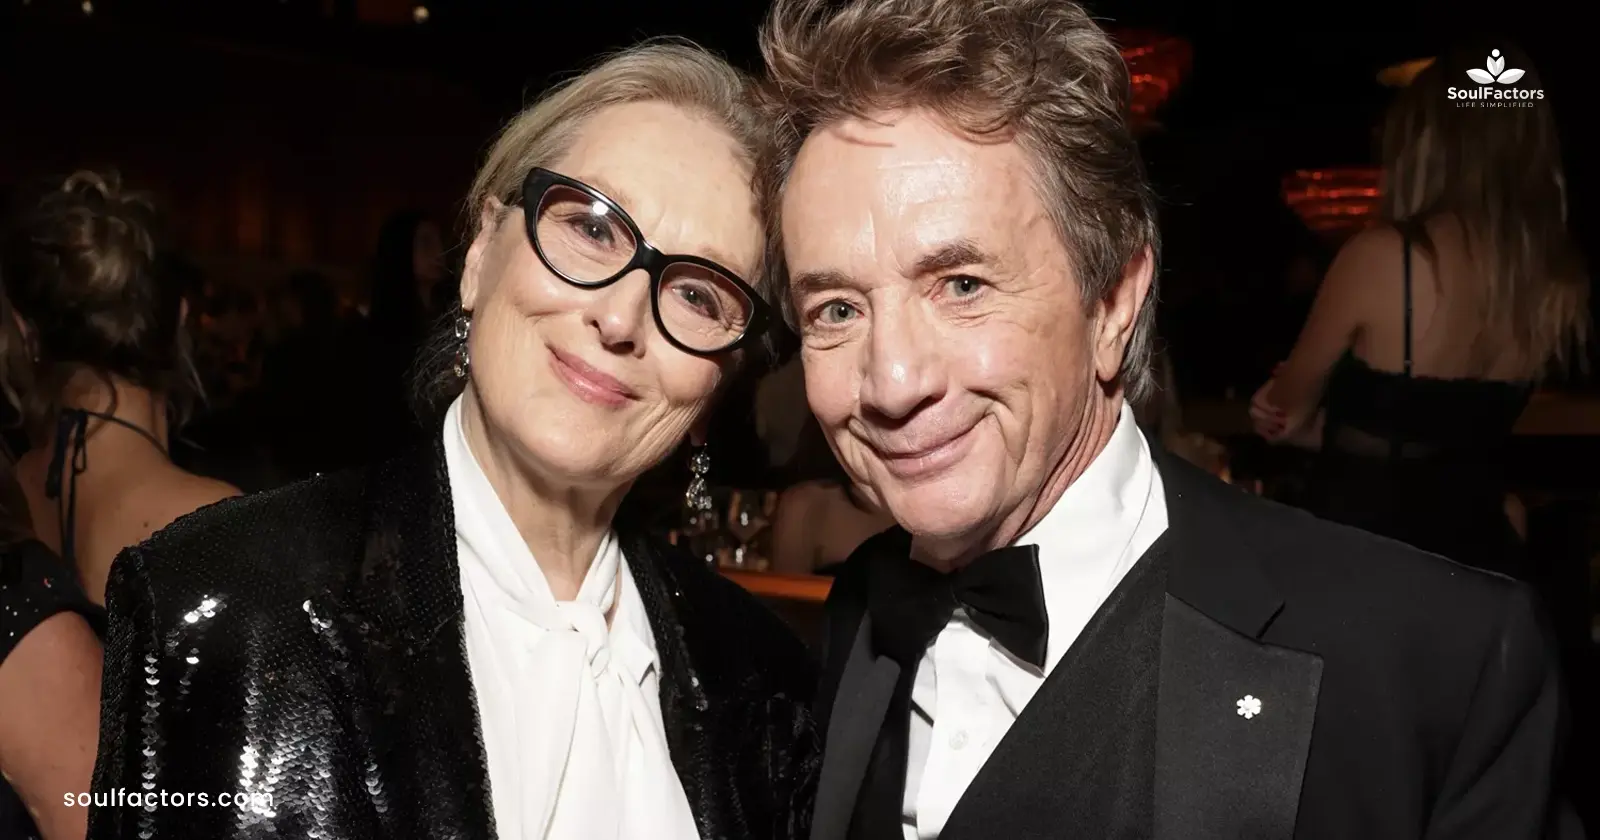 Meryl Streep and Martin Short's dinner outing